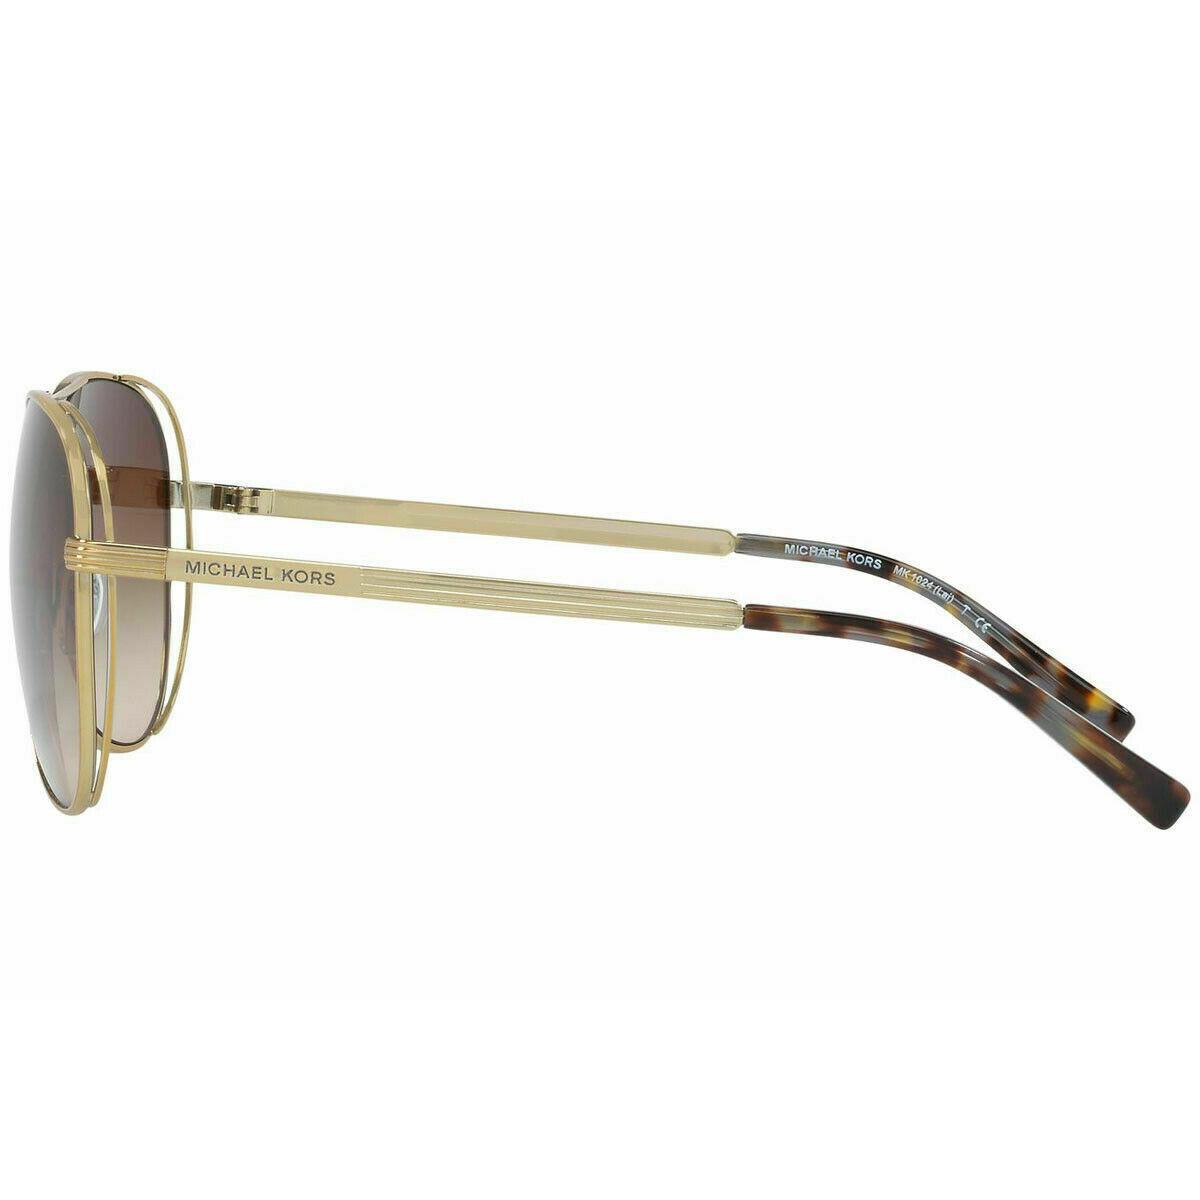 Michael Kors MK1024 119113 58 Gold/silver W/brown Lens 58mm Sunglasses